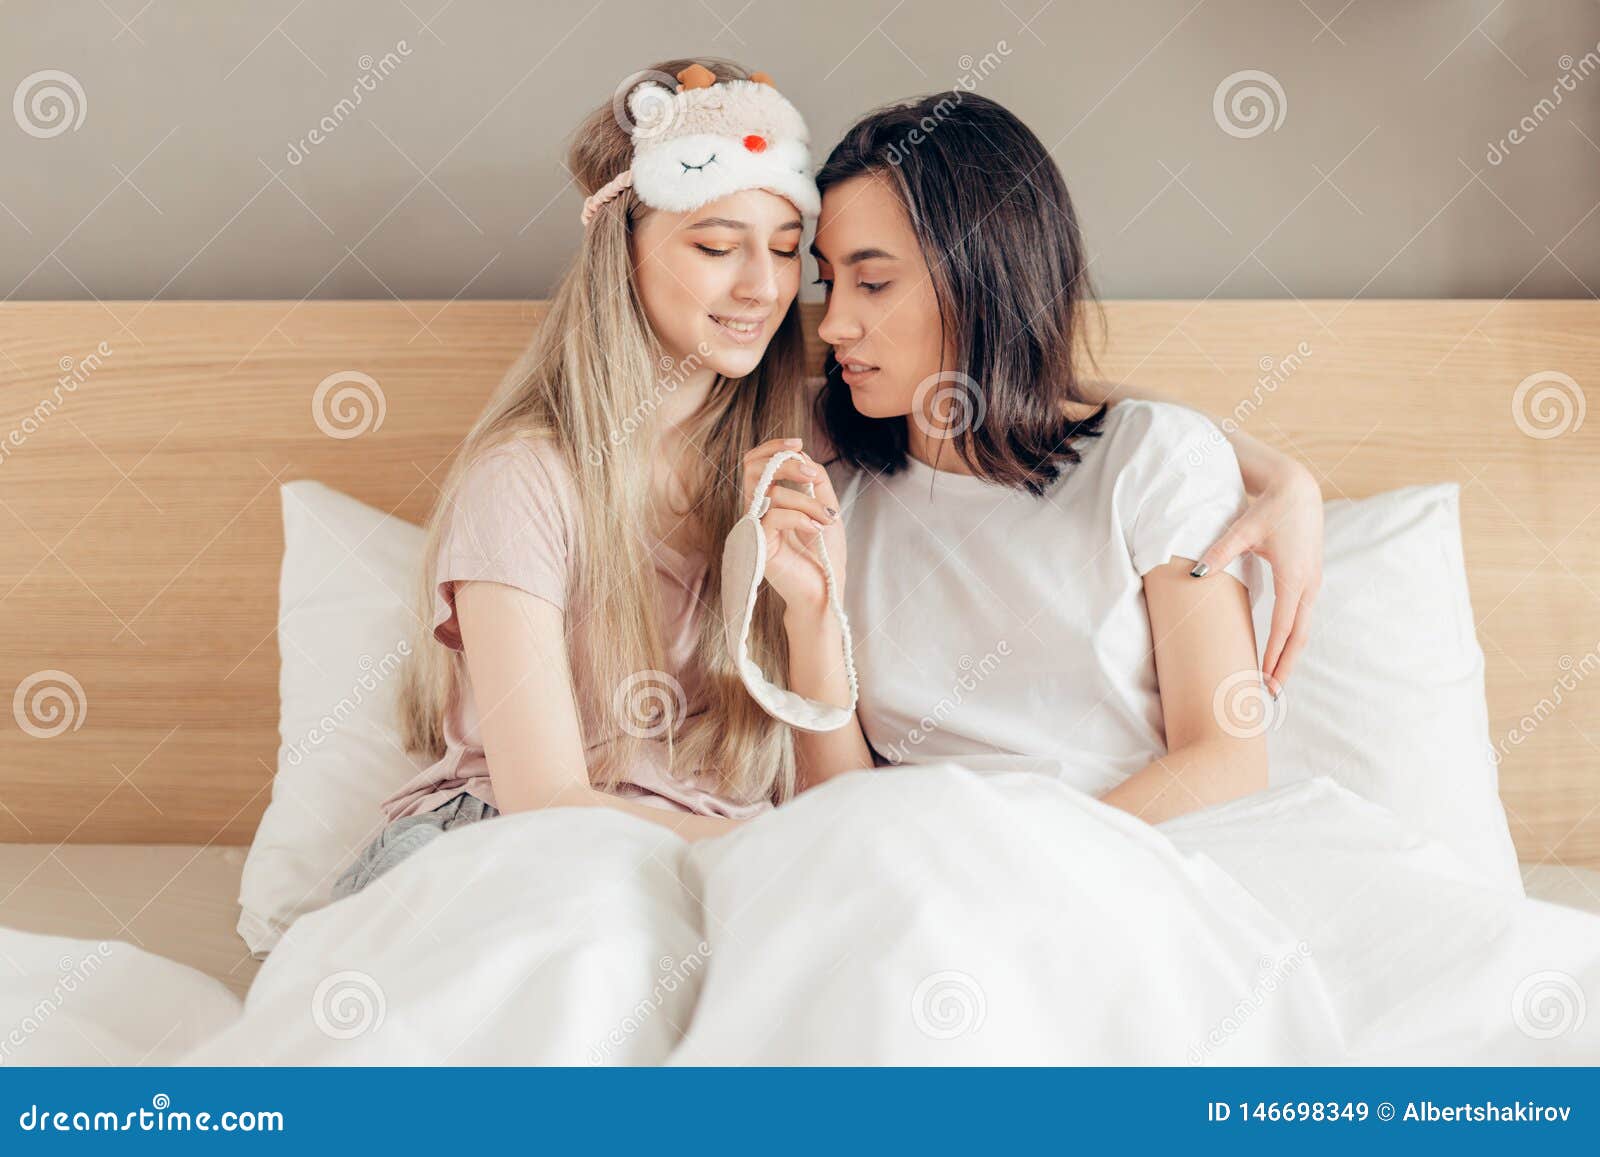 lesbian touches sleeping girl